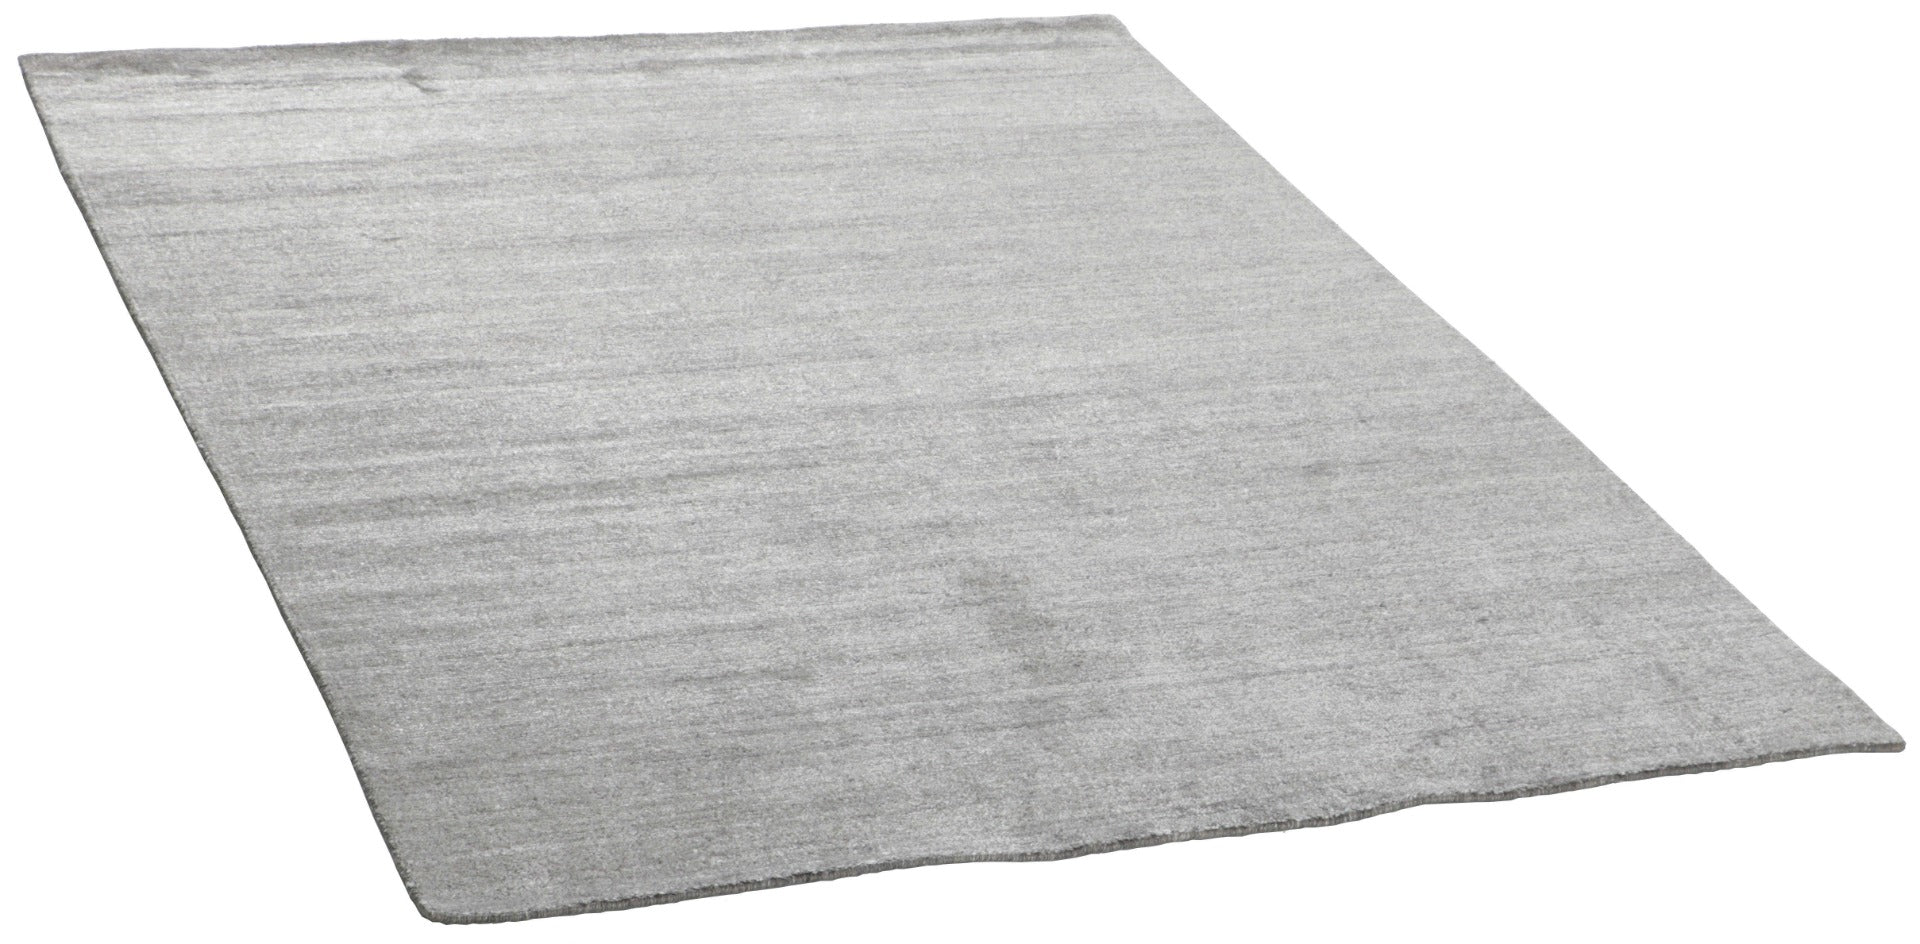 Plain grey viscose area rug